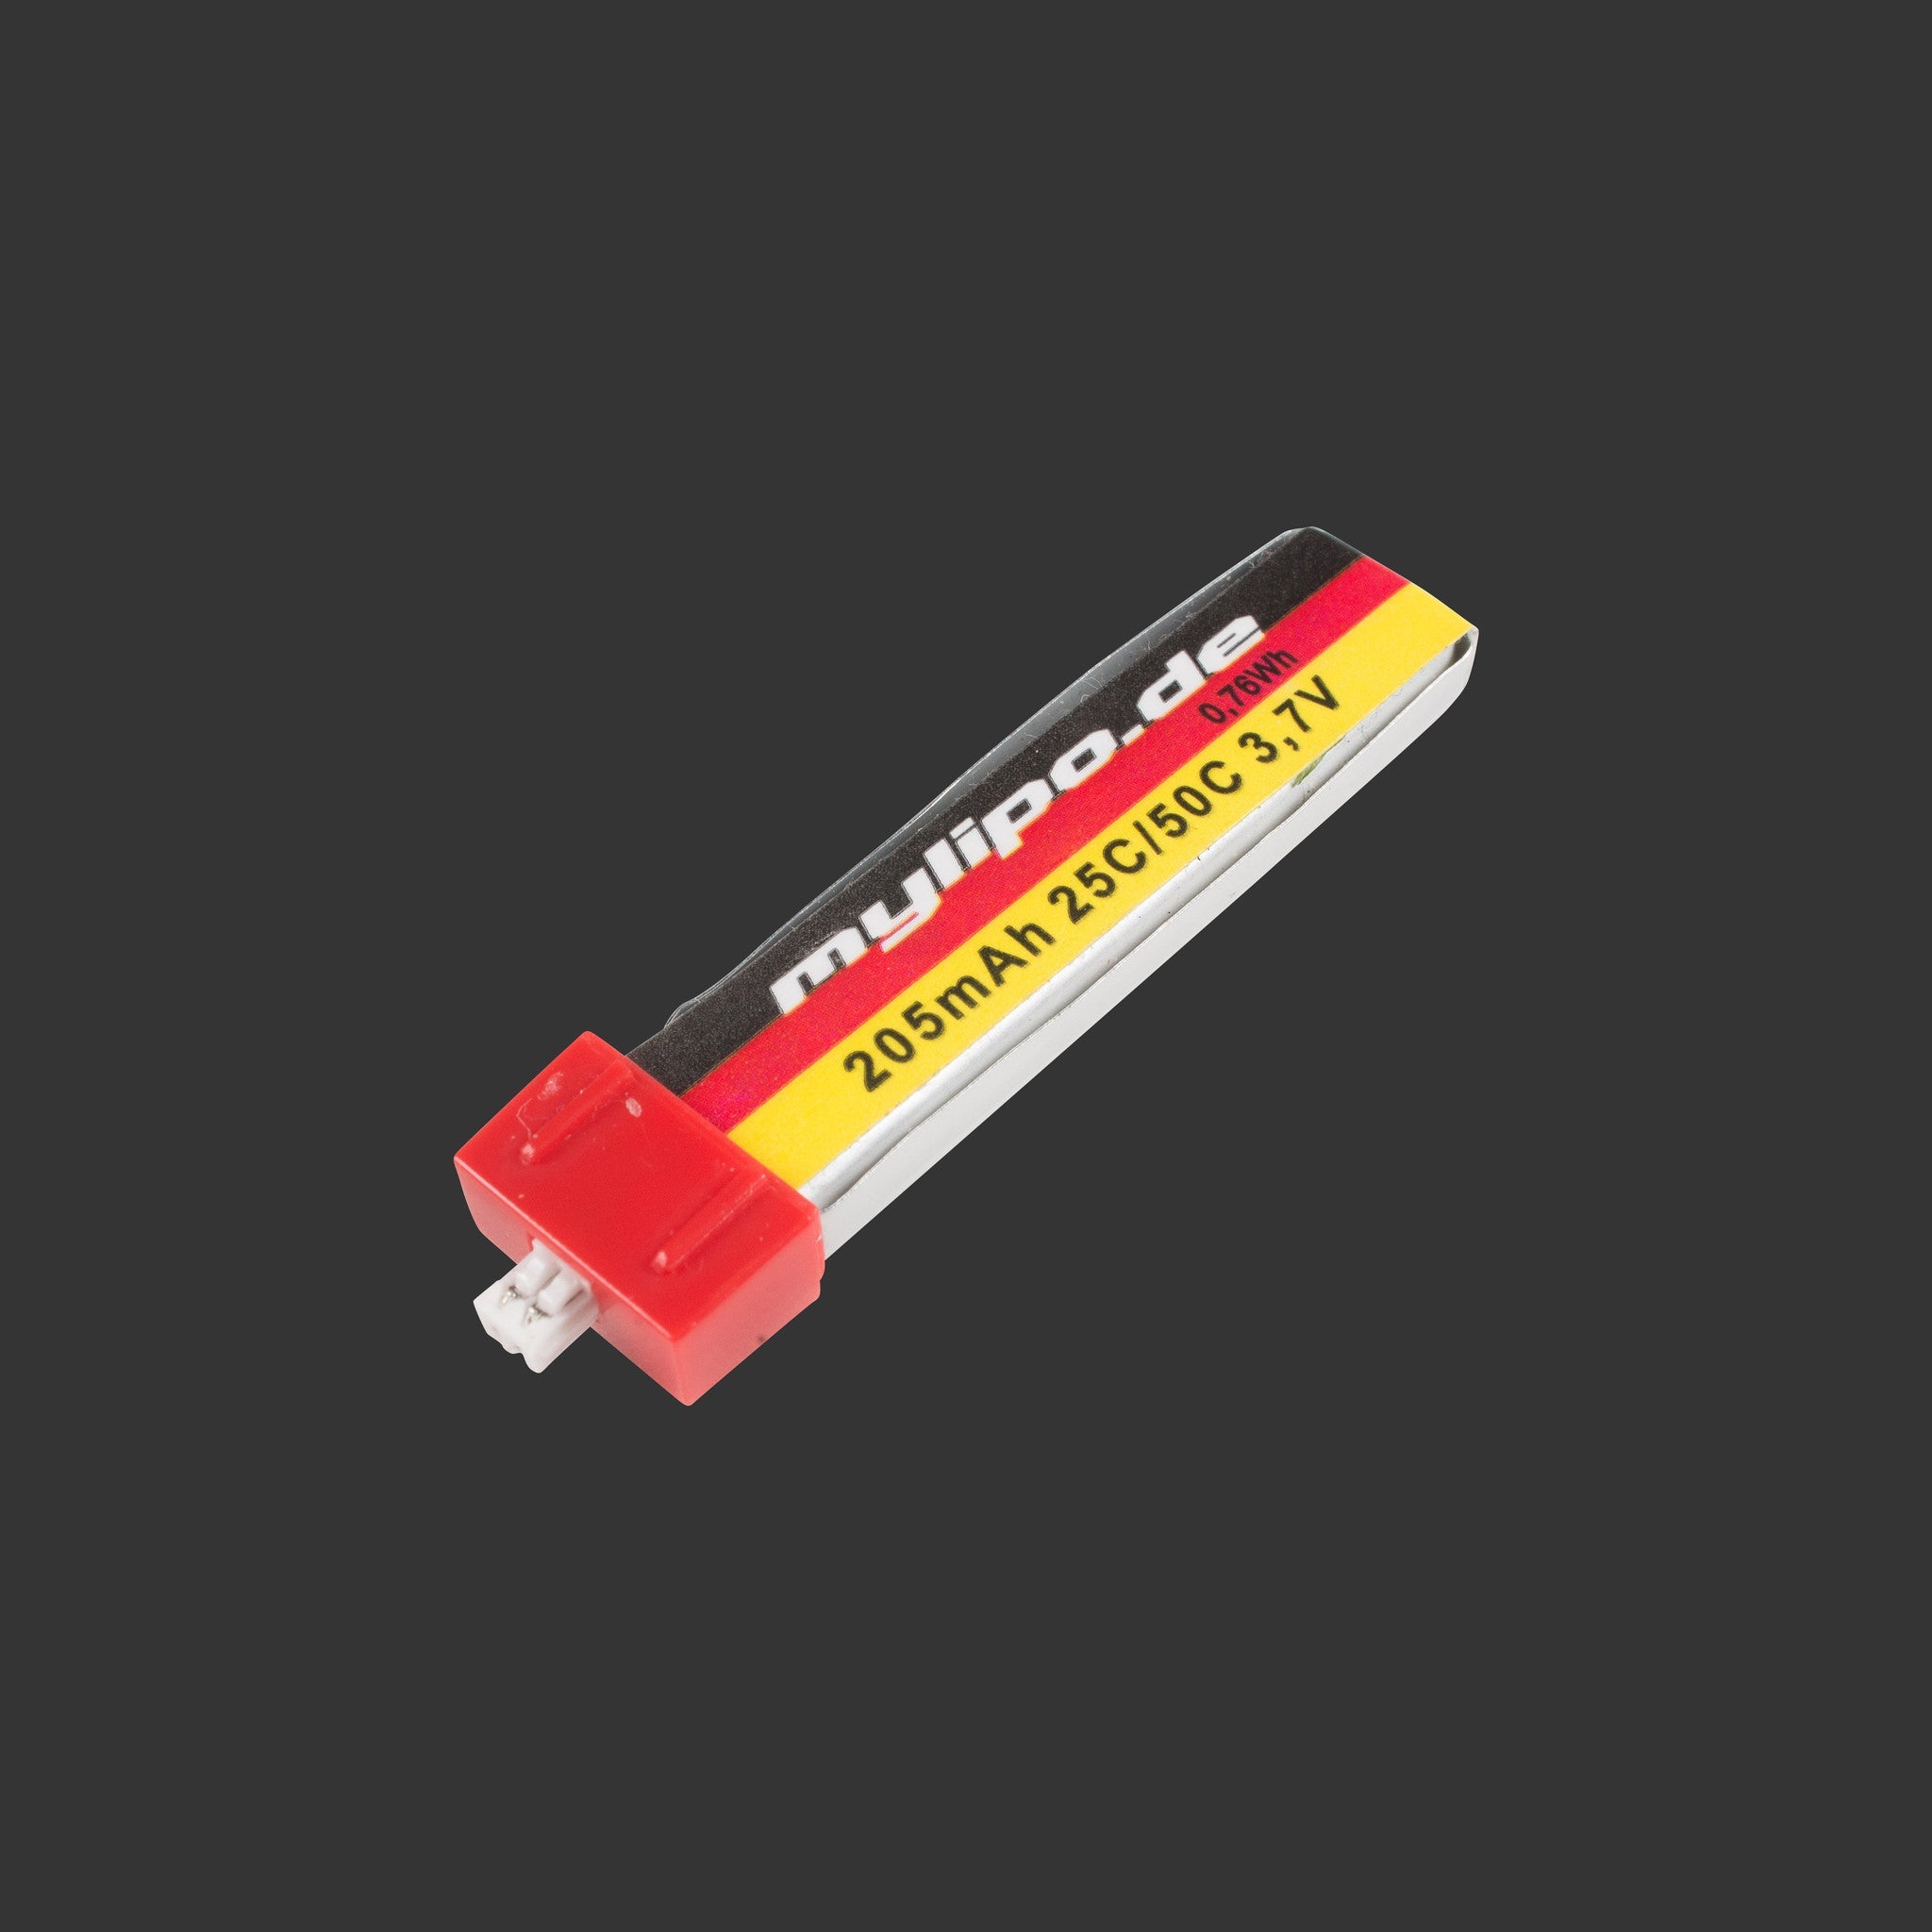 mylipo 205mAh 25C 1S LiPo Battery - Micro-JST Connector (6.0g) [DG]